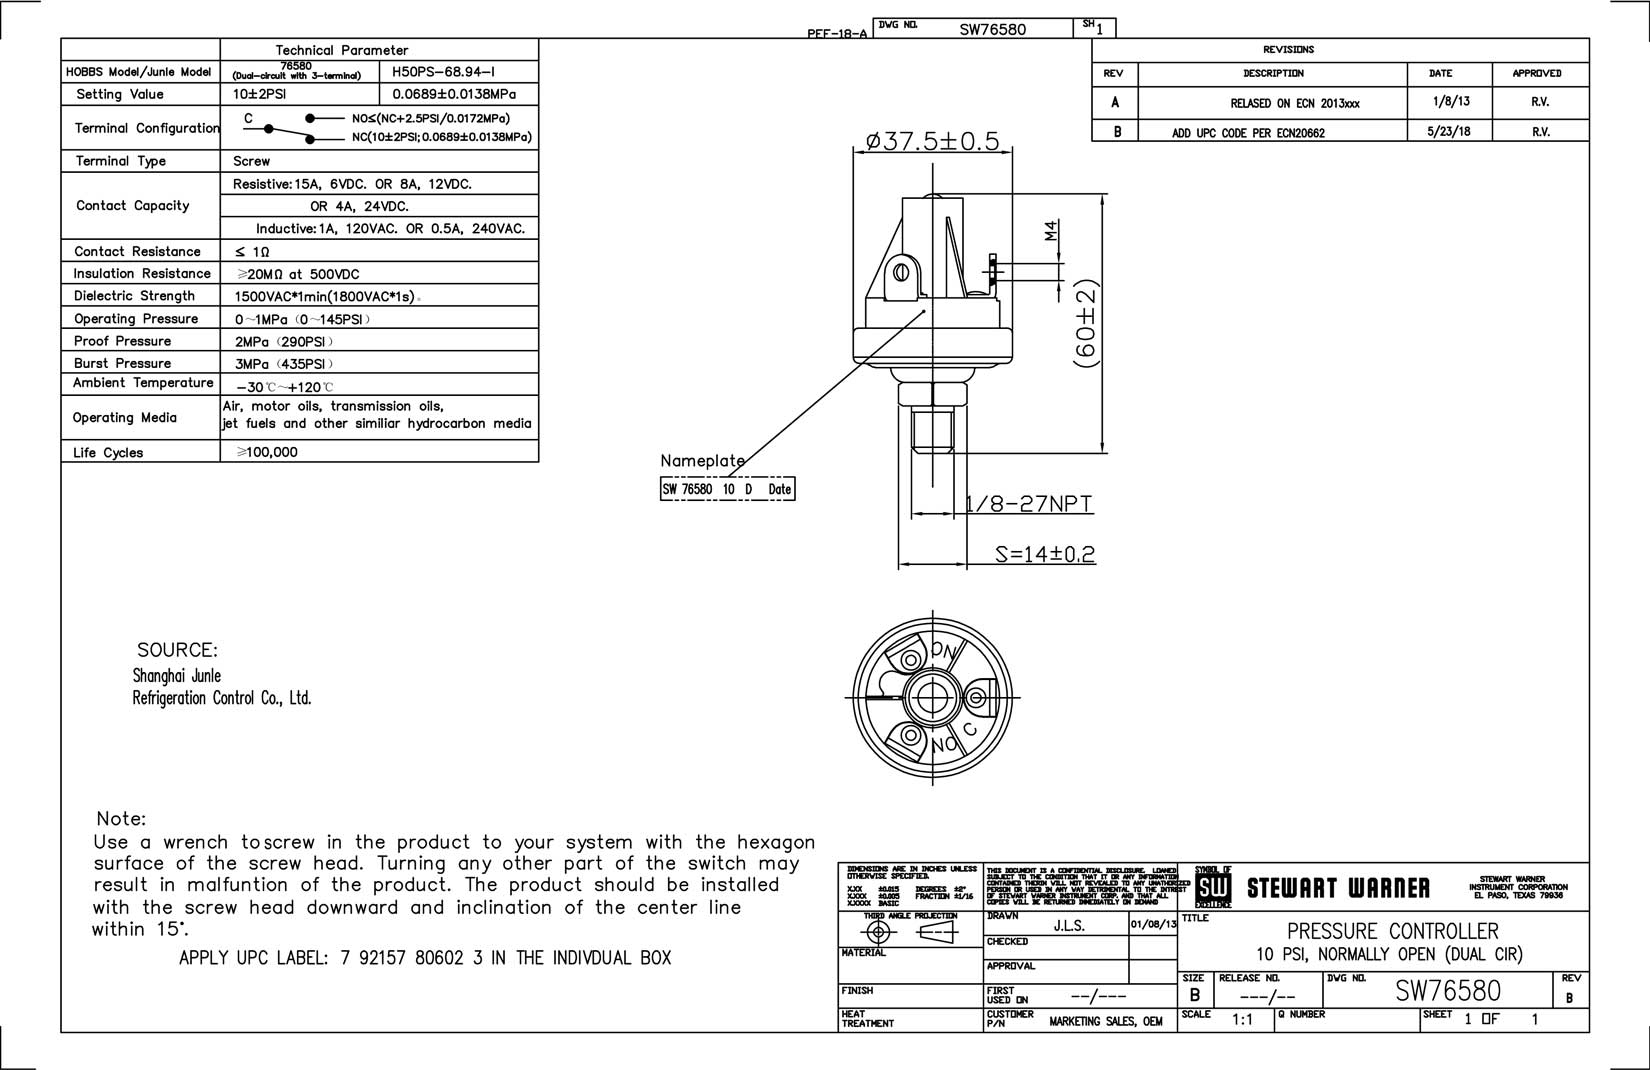 SW76580 - Stewart Warner 5000 Series Pressure Switch Dual Circuit